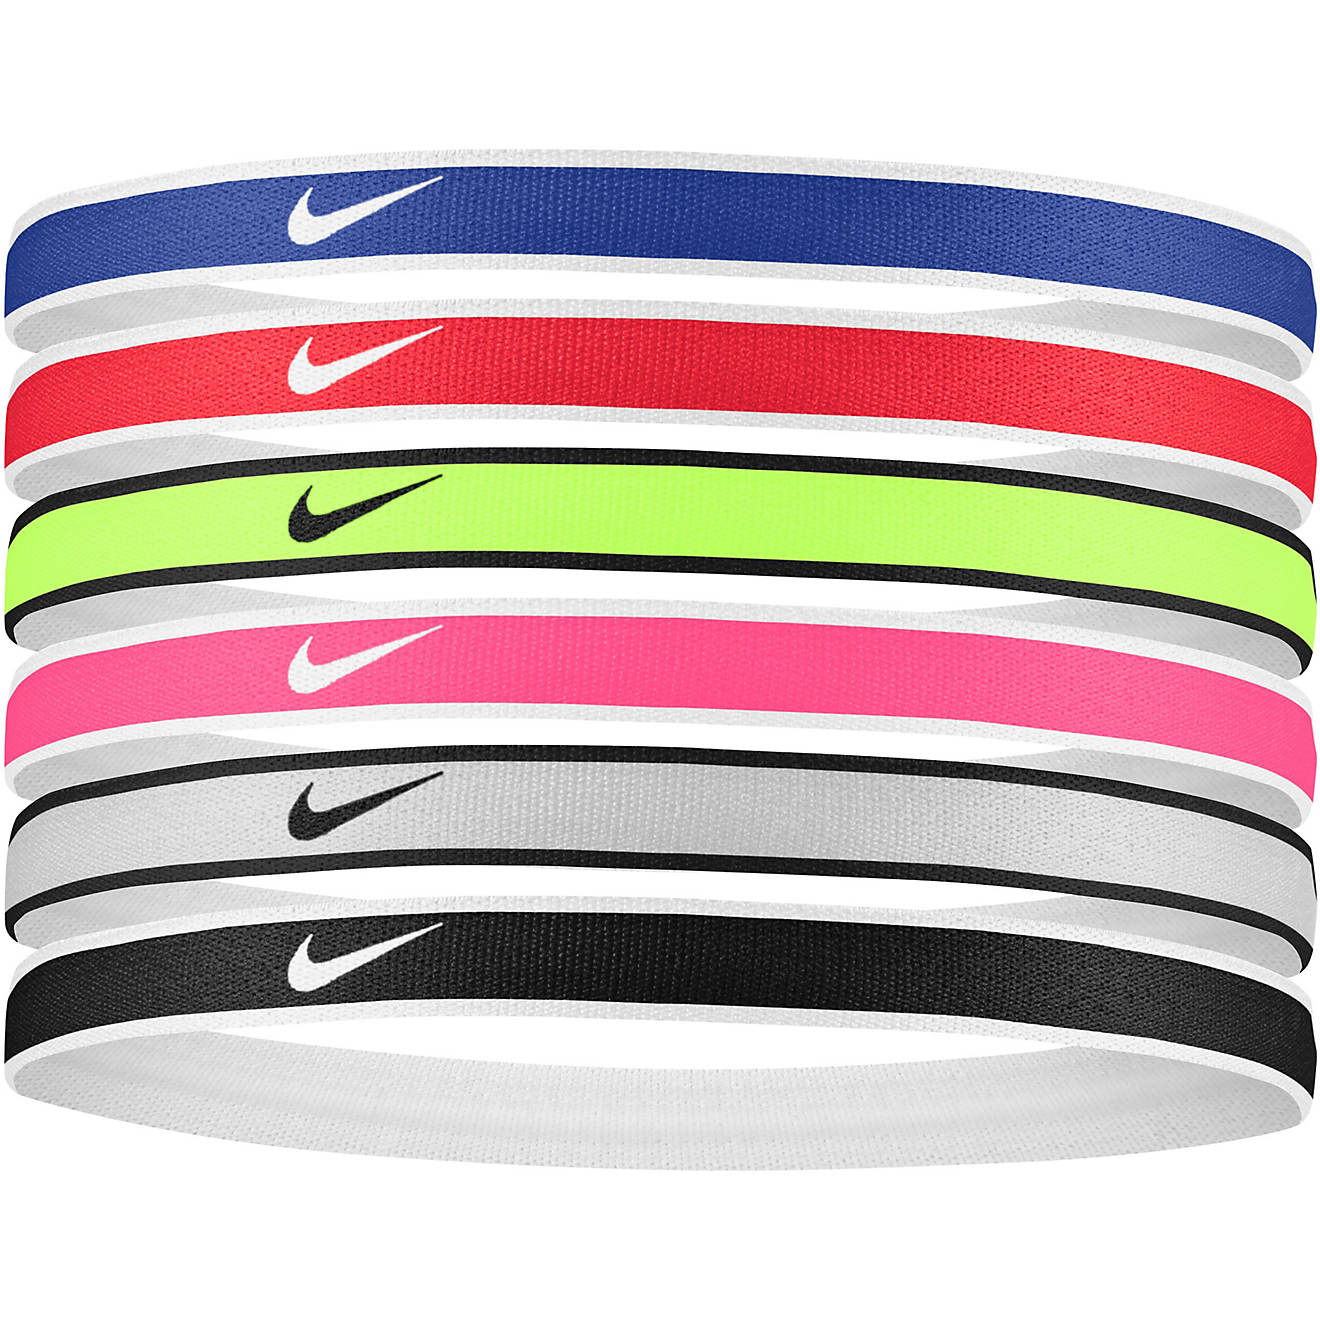 Резинка найк. Nike Swoosh Sport Headbands. Повязка Nike Swoosh Headband. Повязка Nike Swoosh Headband белый. Nike Swoosh Sport Headbands 6 шт.